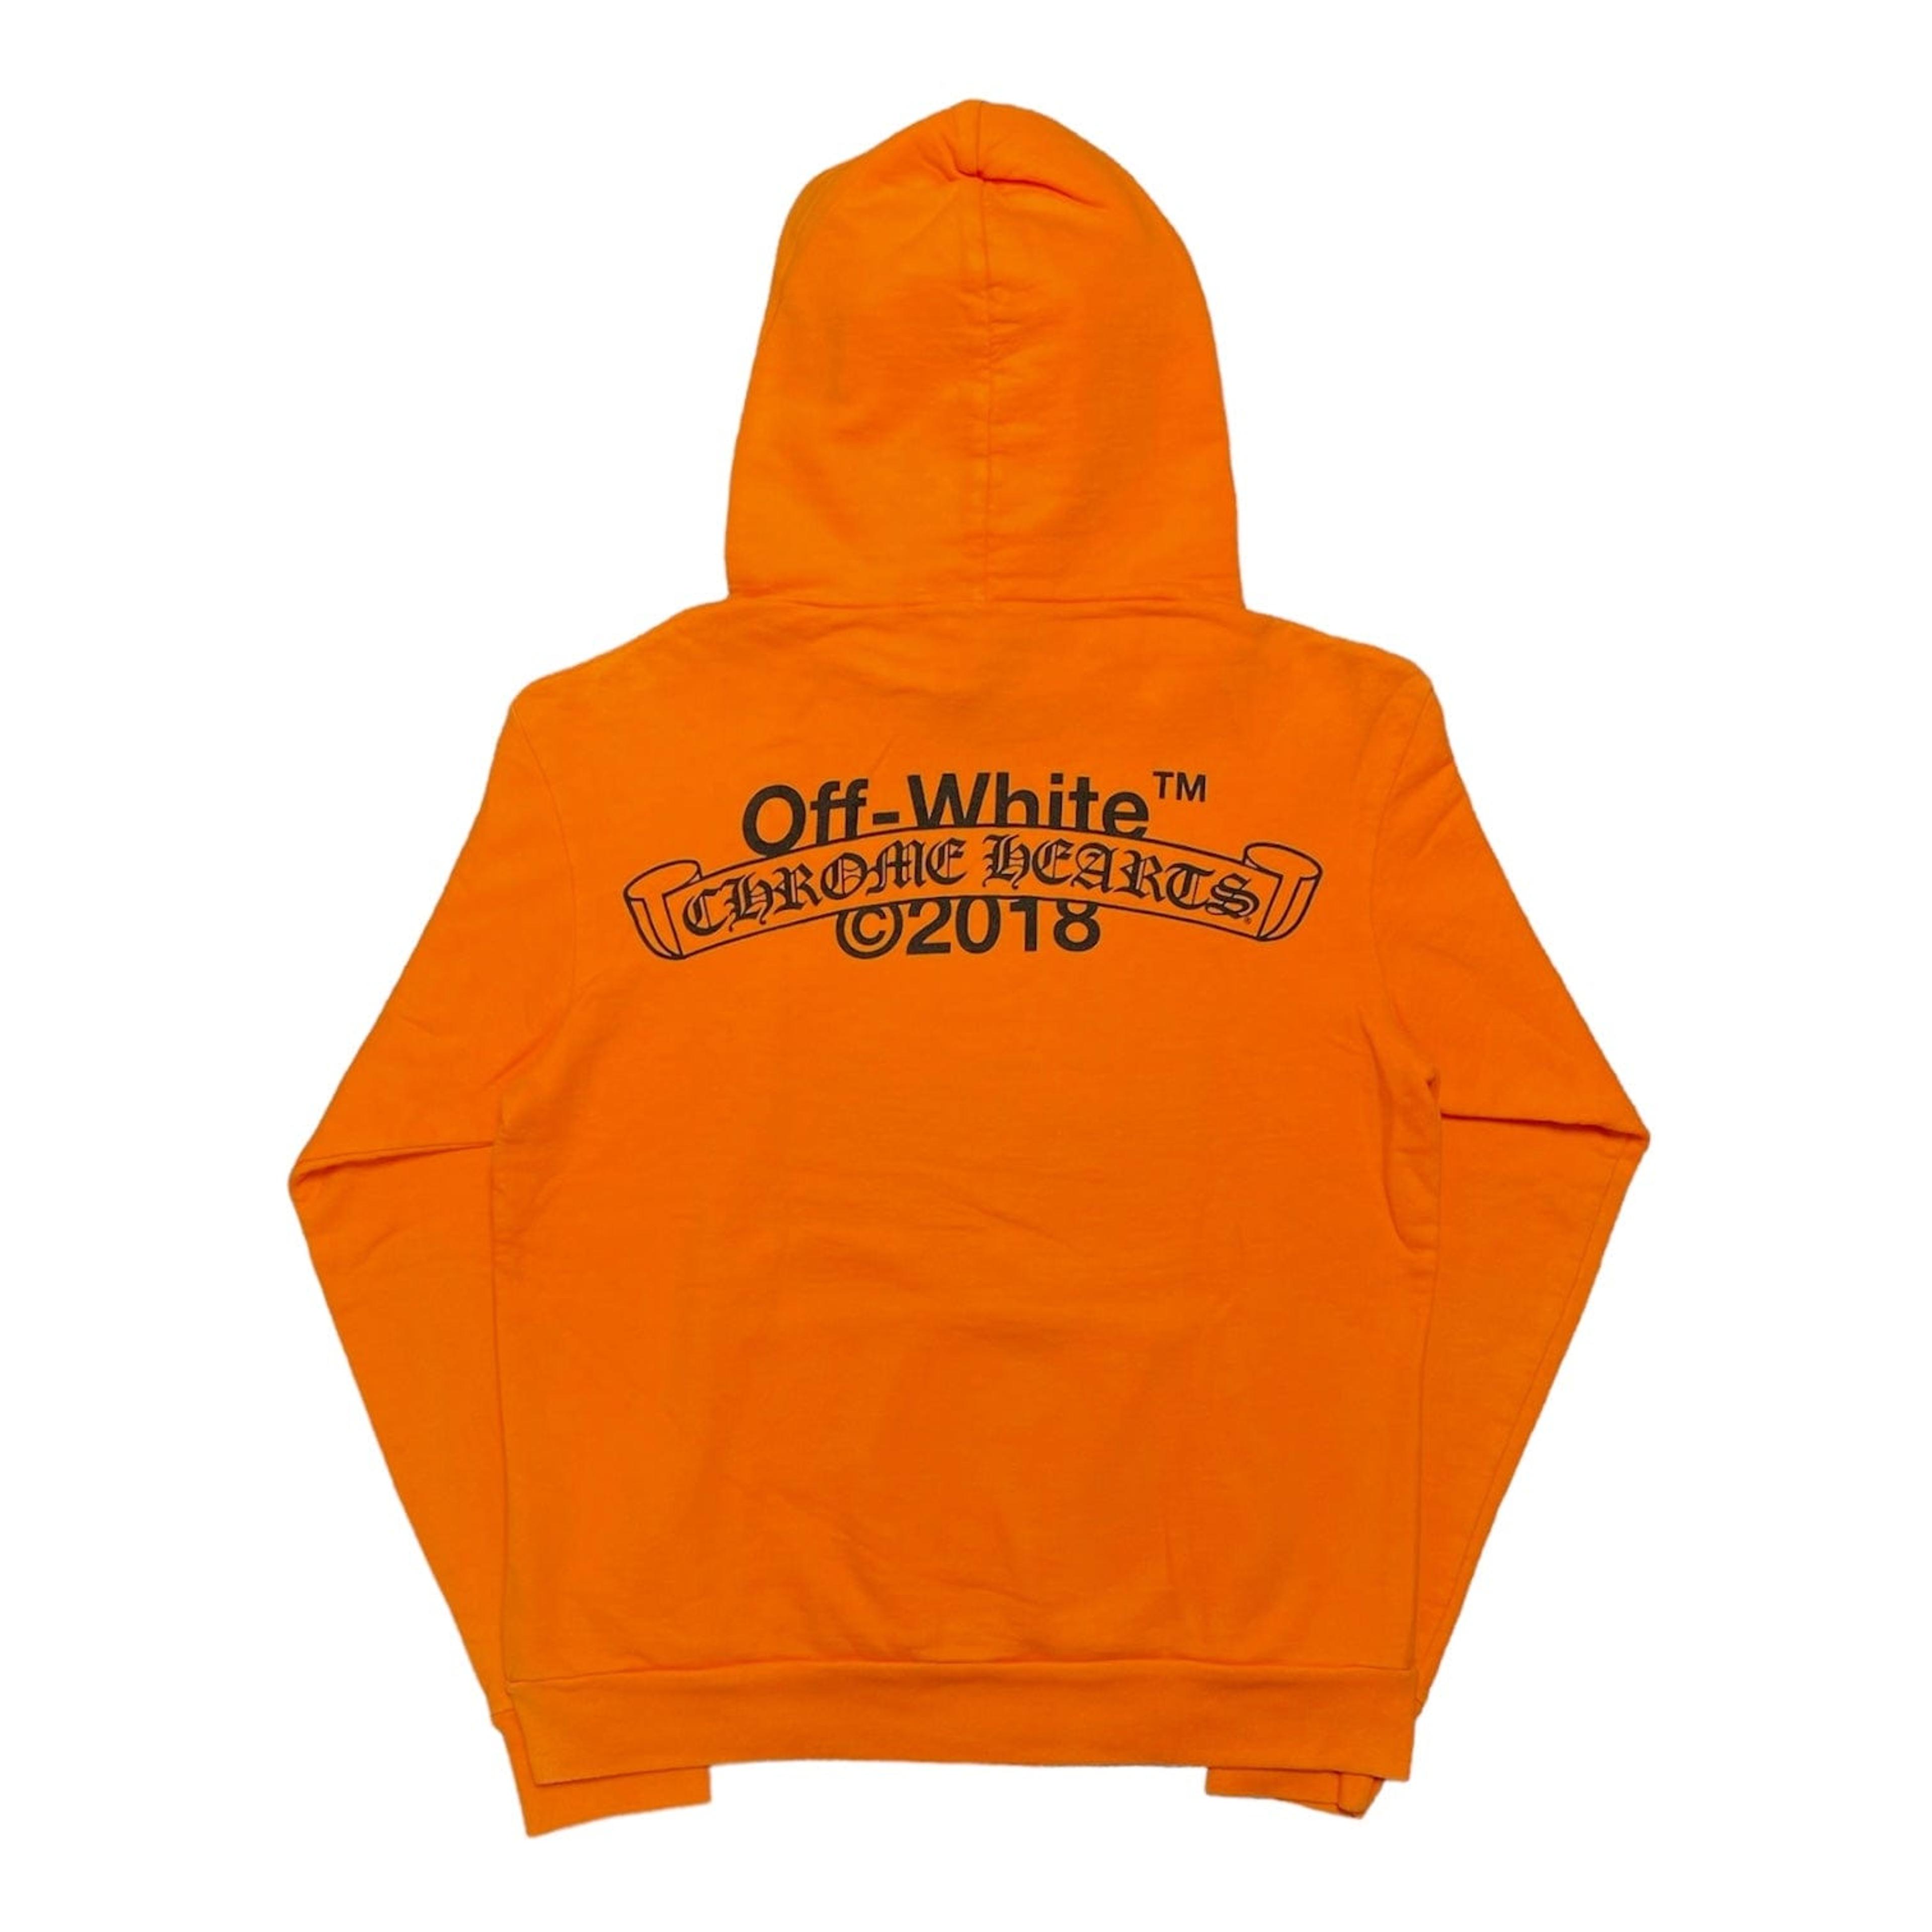 Alternate View 1 of Chrome Hearts x Off-White 2018 Hooded Sweatshirt Orange Black Pr